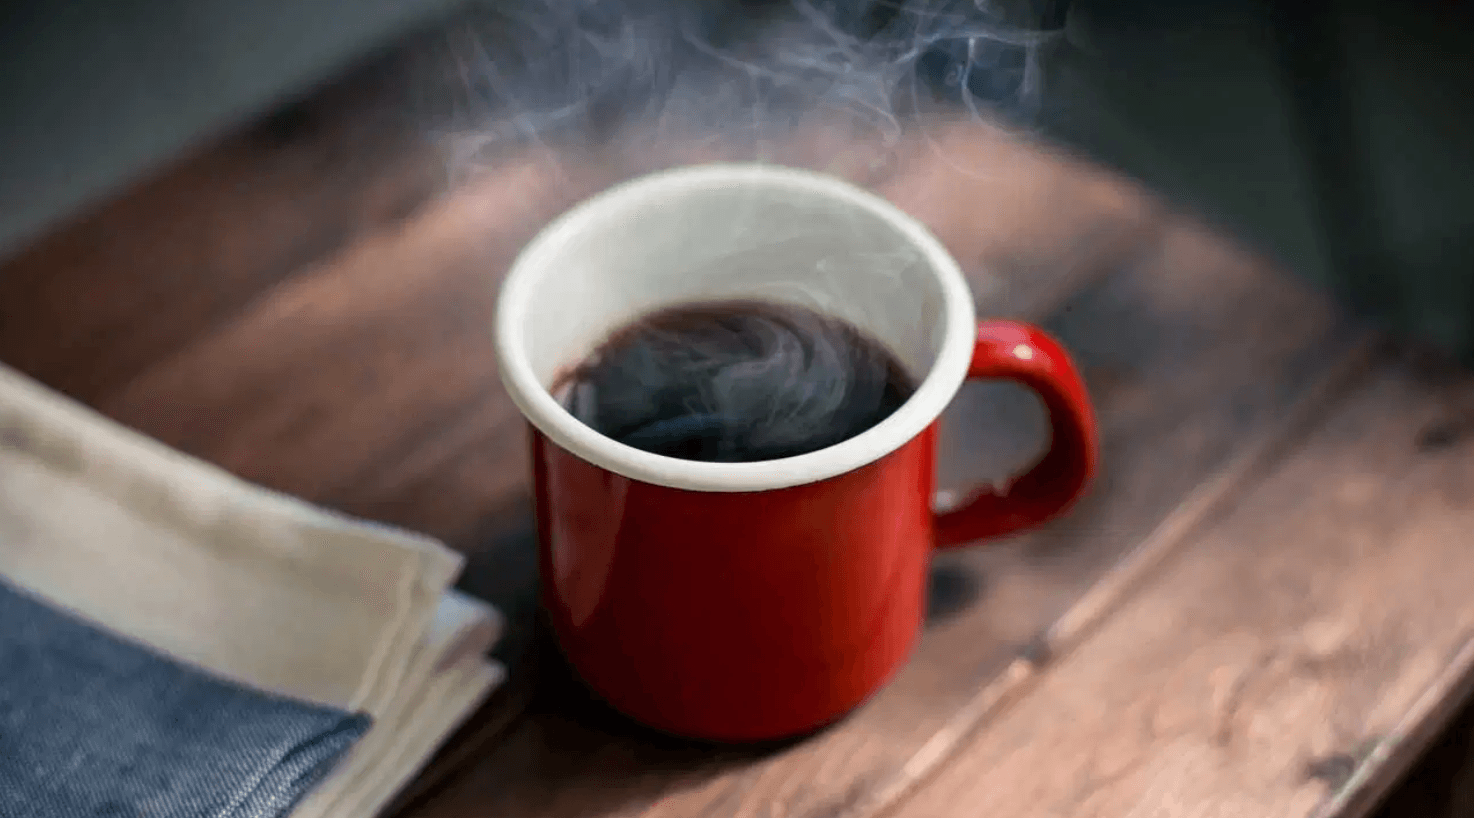 Hot cup of mushroom coffee in a red mug 